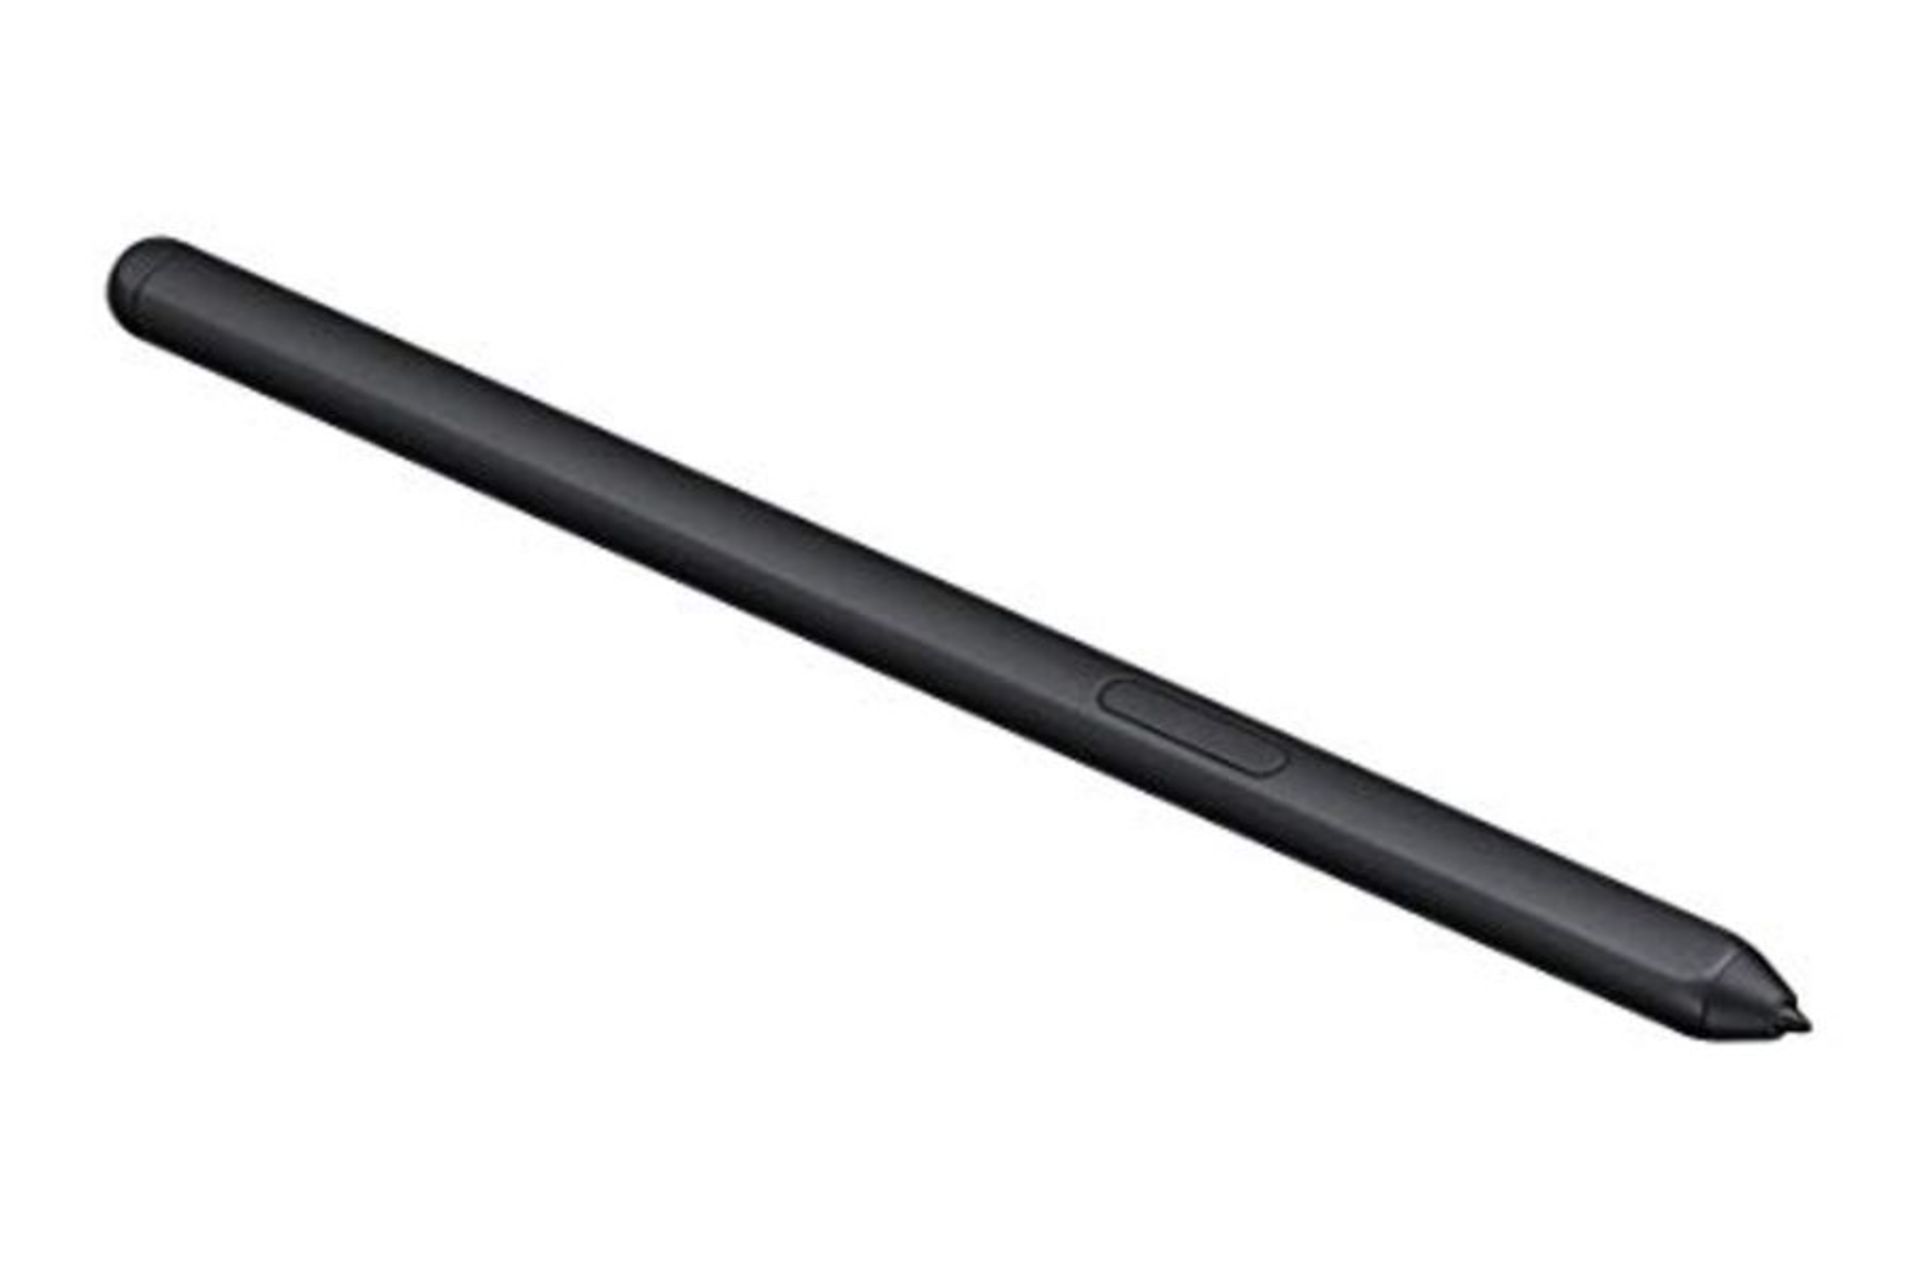 Samsung S21 Ultra S Pen Black